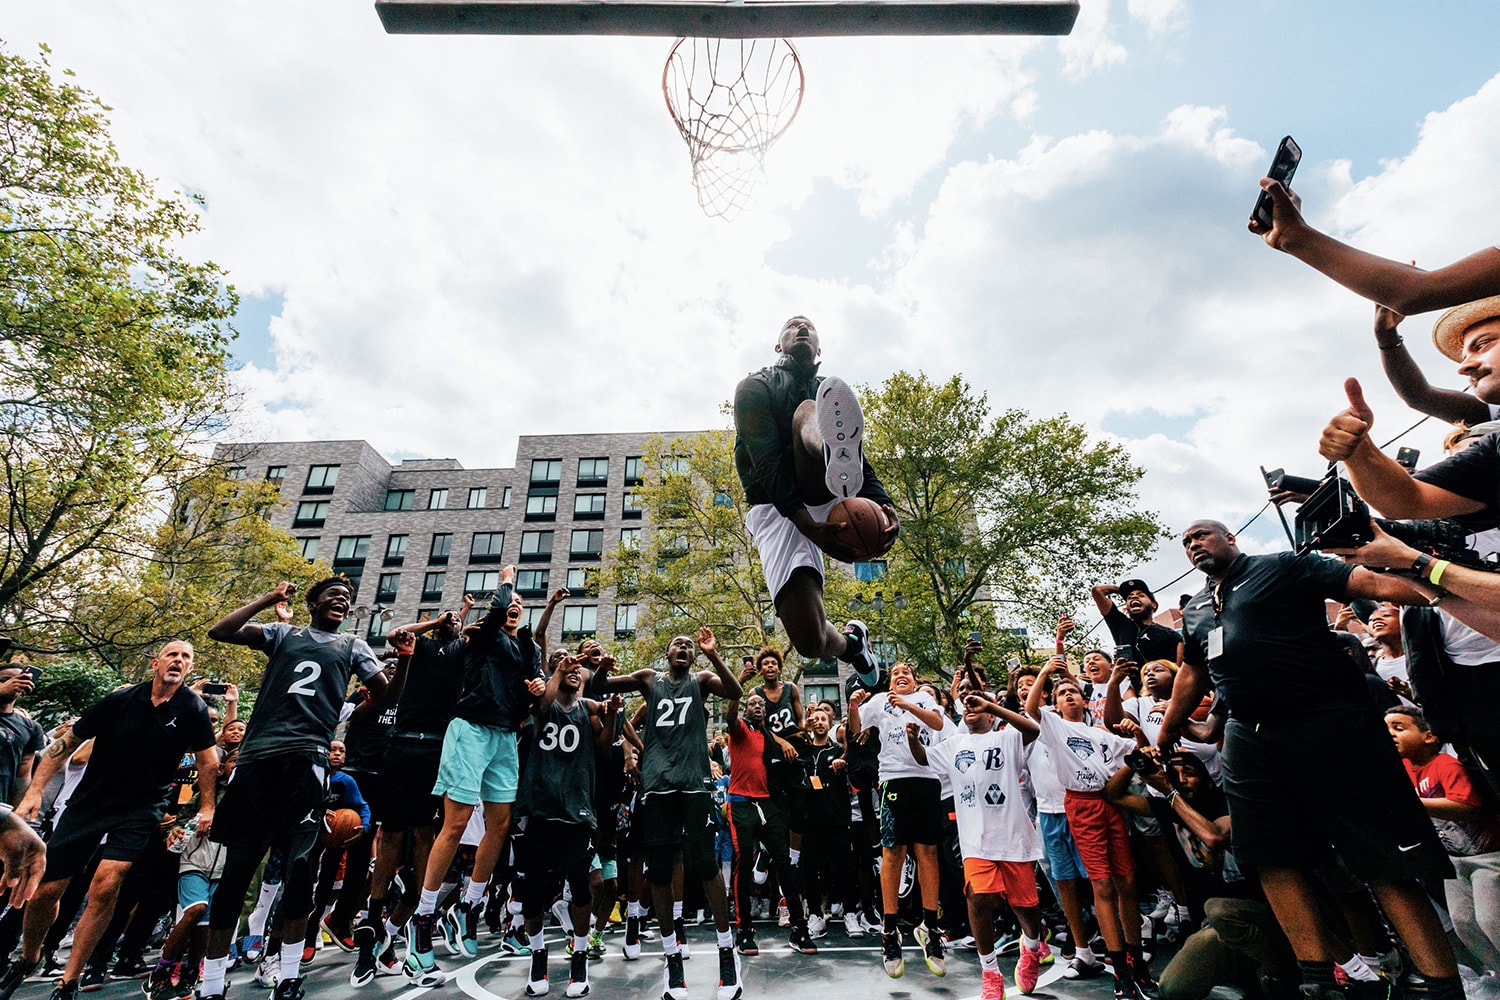 Jordan Brand 正式發佈最新籃球鞋 Air Jordan XXXIV 完整資訊